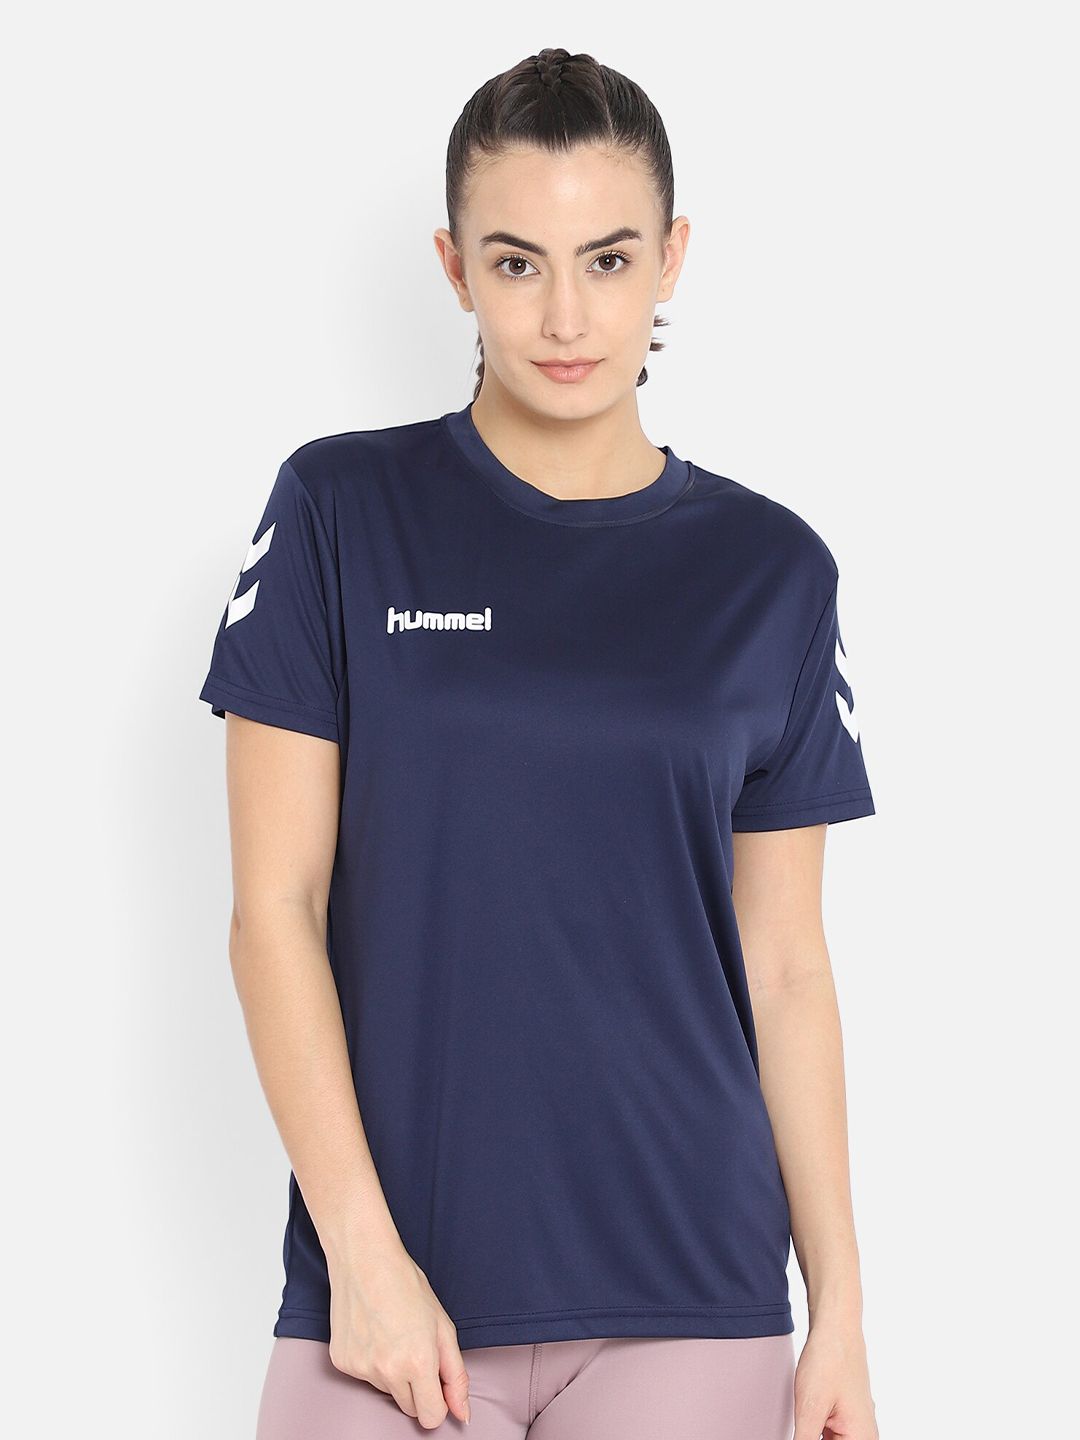 hummel Women Navy Blue Brand Logo Sports T-shirt Price in India